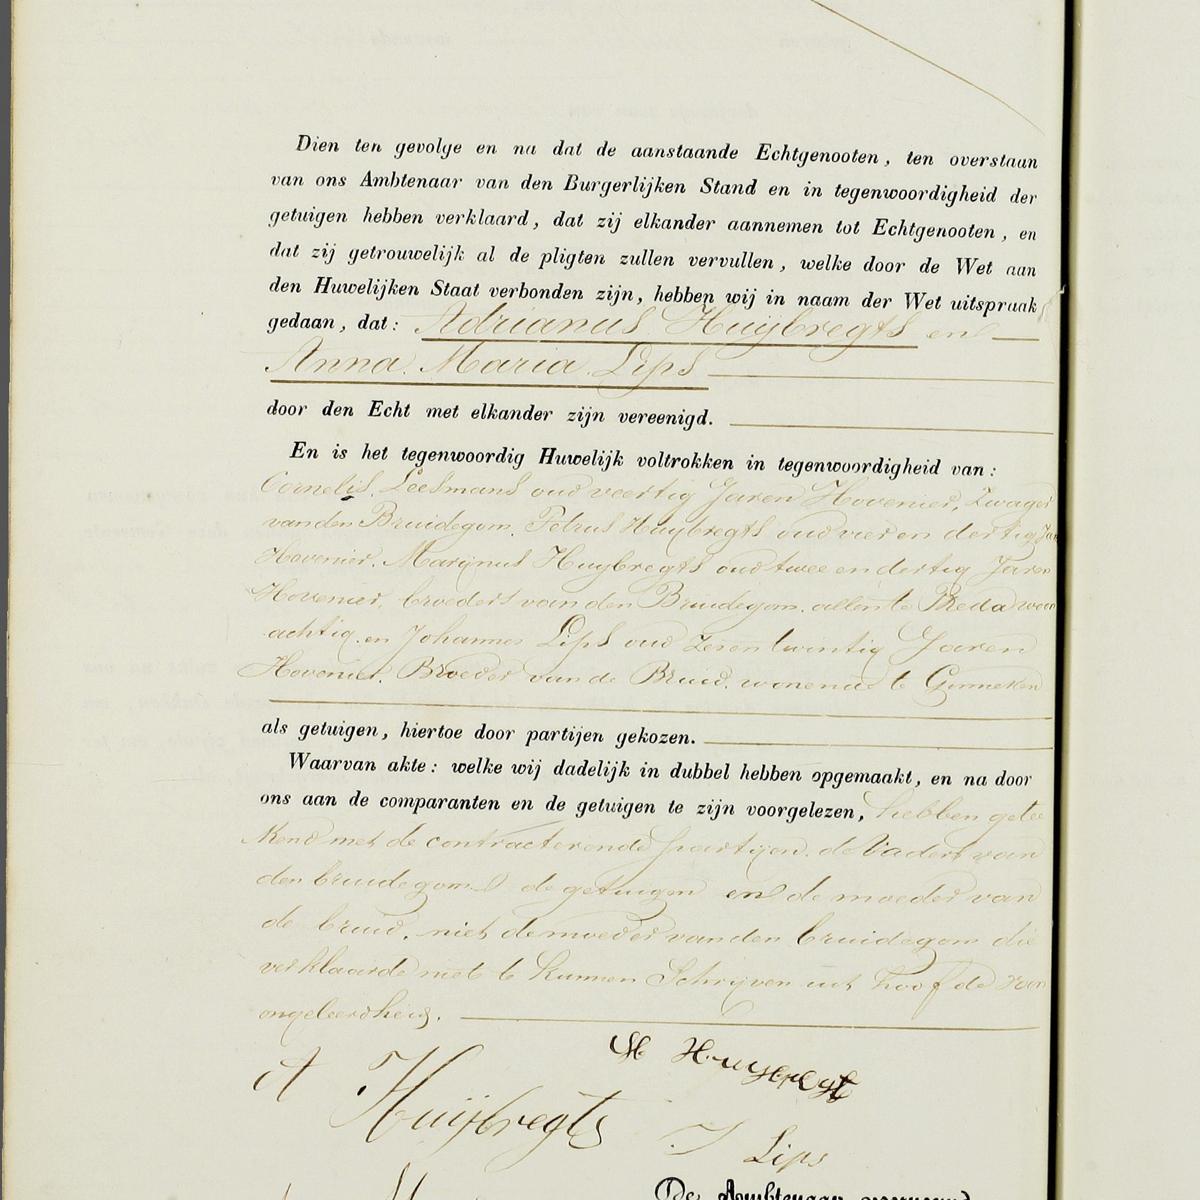 Civil registry of marriages, Ginneken en Bavel, 1857, record 2, left page